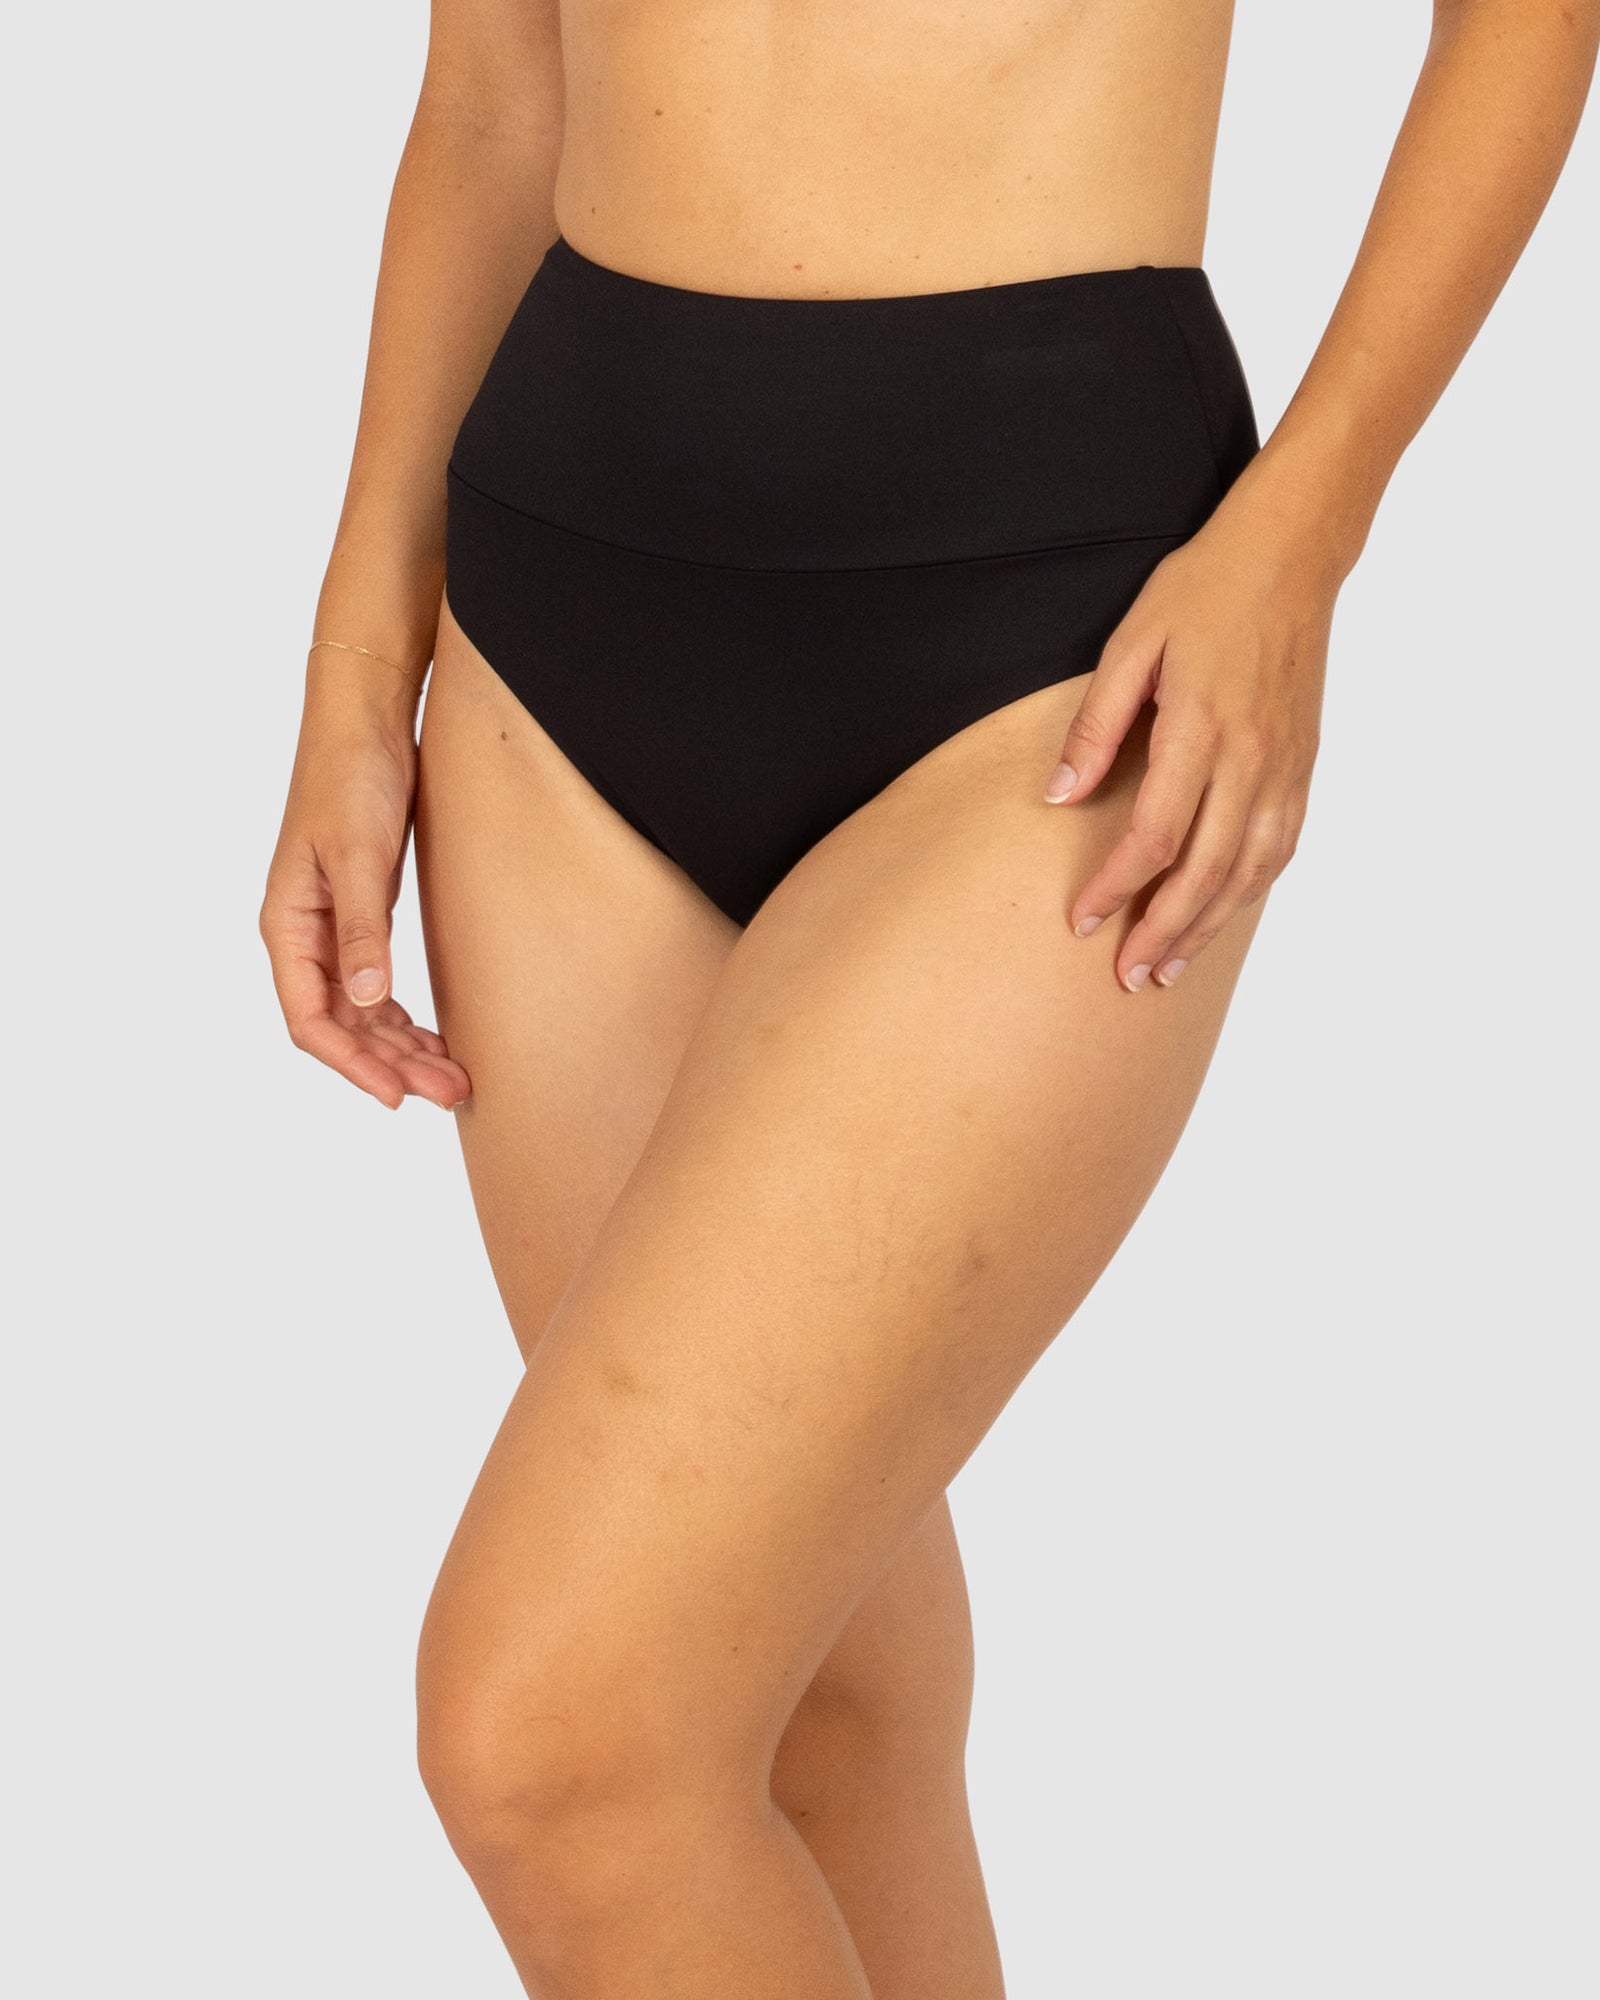 Chloro-Resist Extra Firm Bikini Bottom